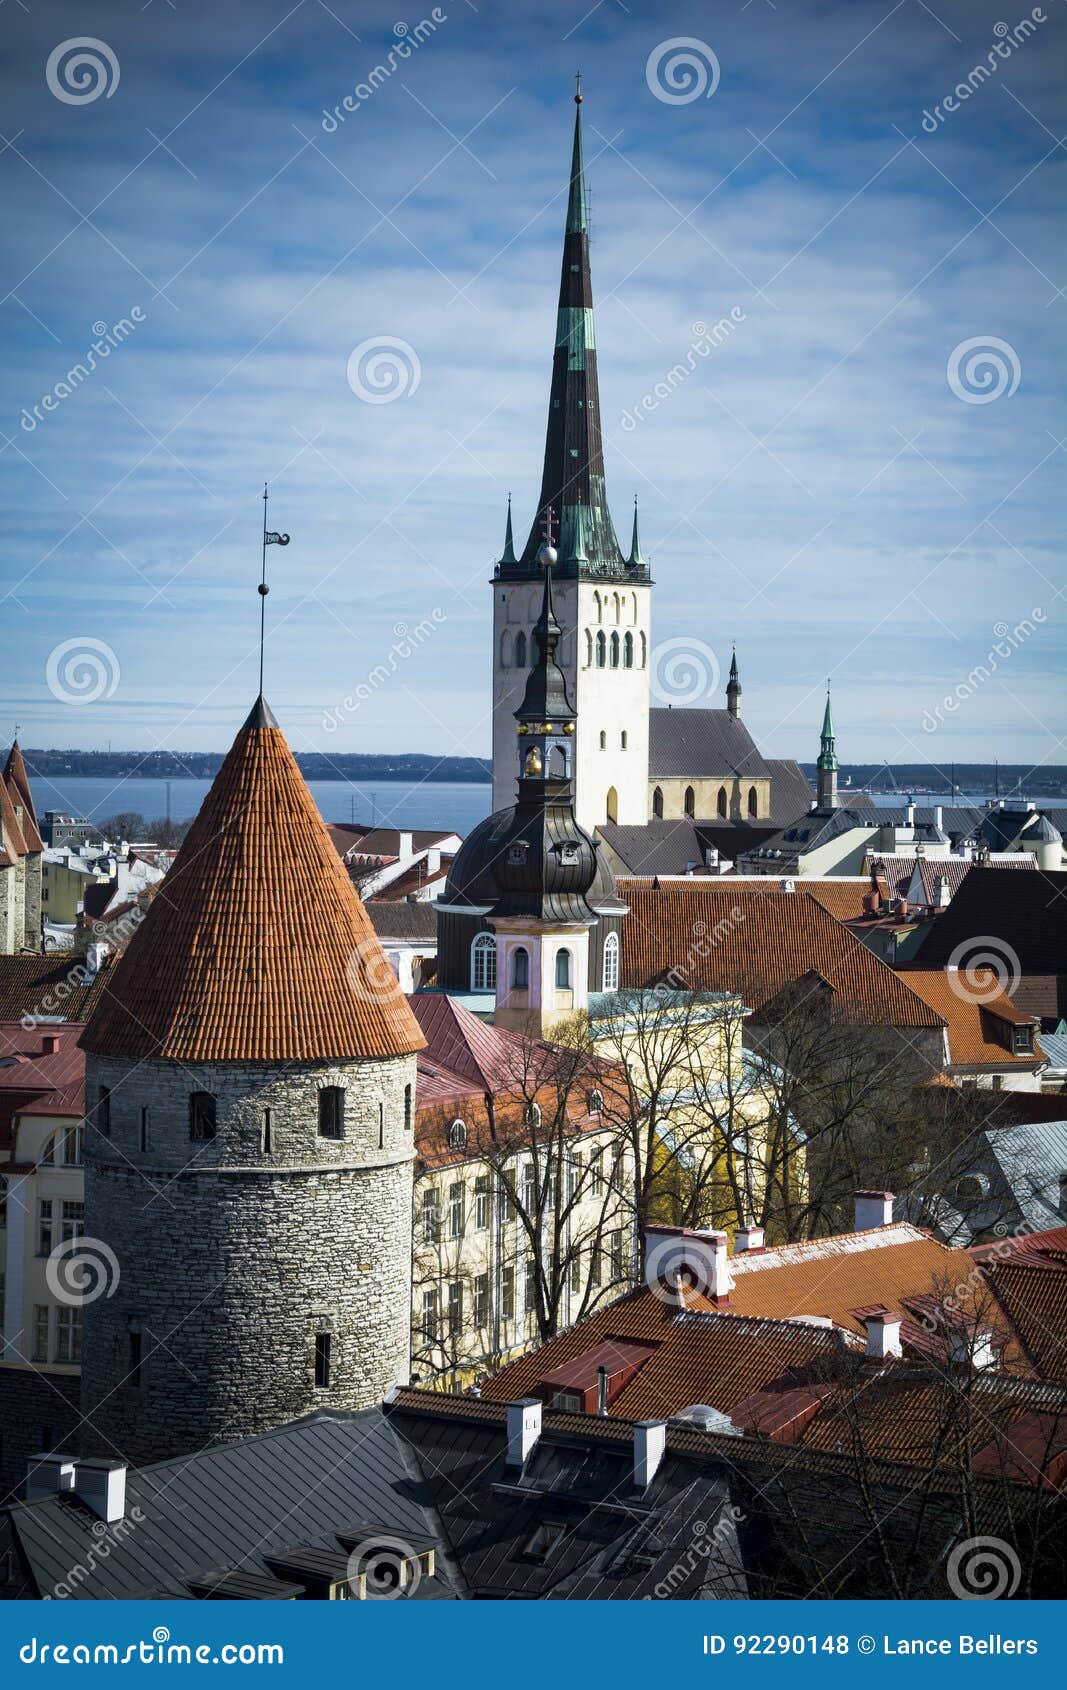 tallinn capital of estonia in the baltic